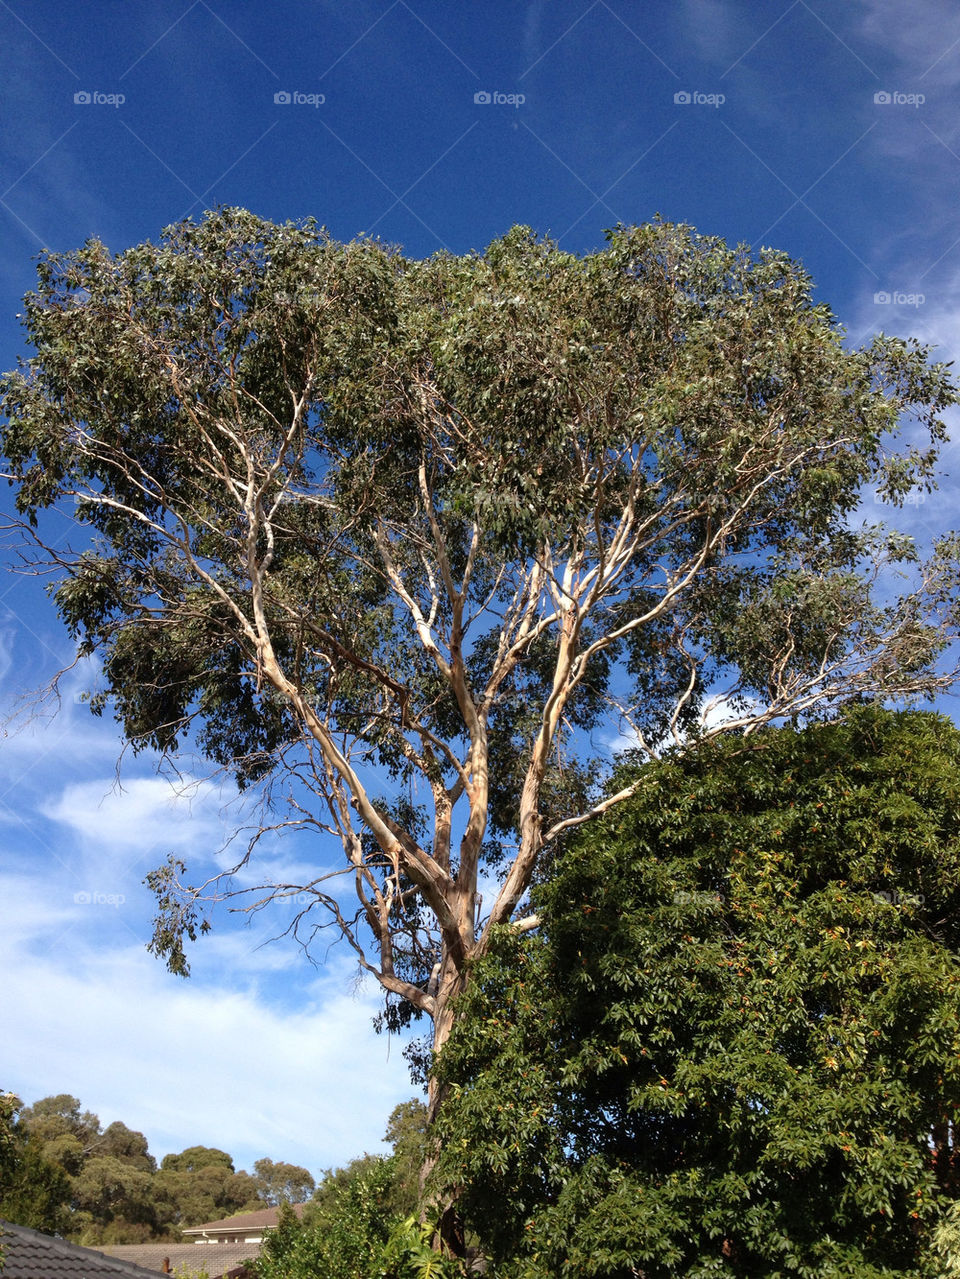 sky blue trees australia by eaglezx